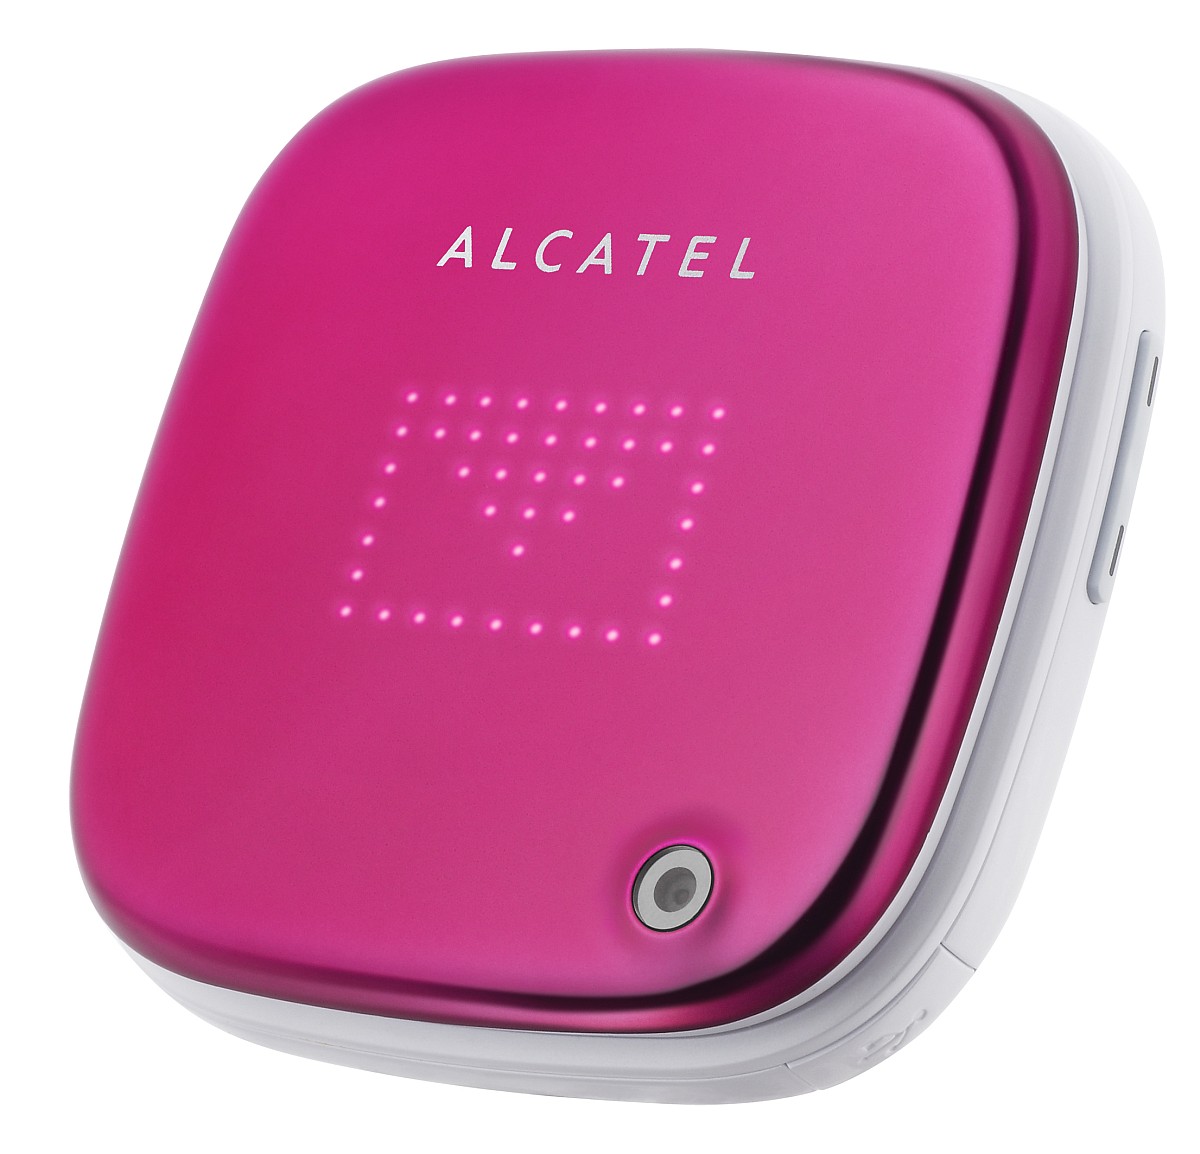 Розовый телефон раскладушка. Alcatel one Touch 810. Алкатель one Touch 810. Раскладушка пудреница Alcatel. Alcatel ot-810d.